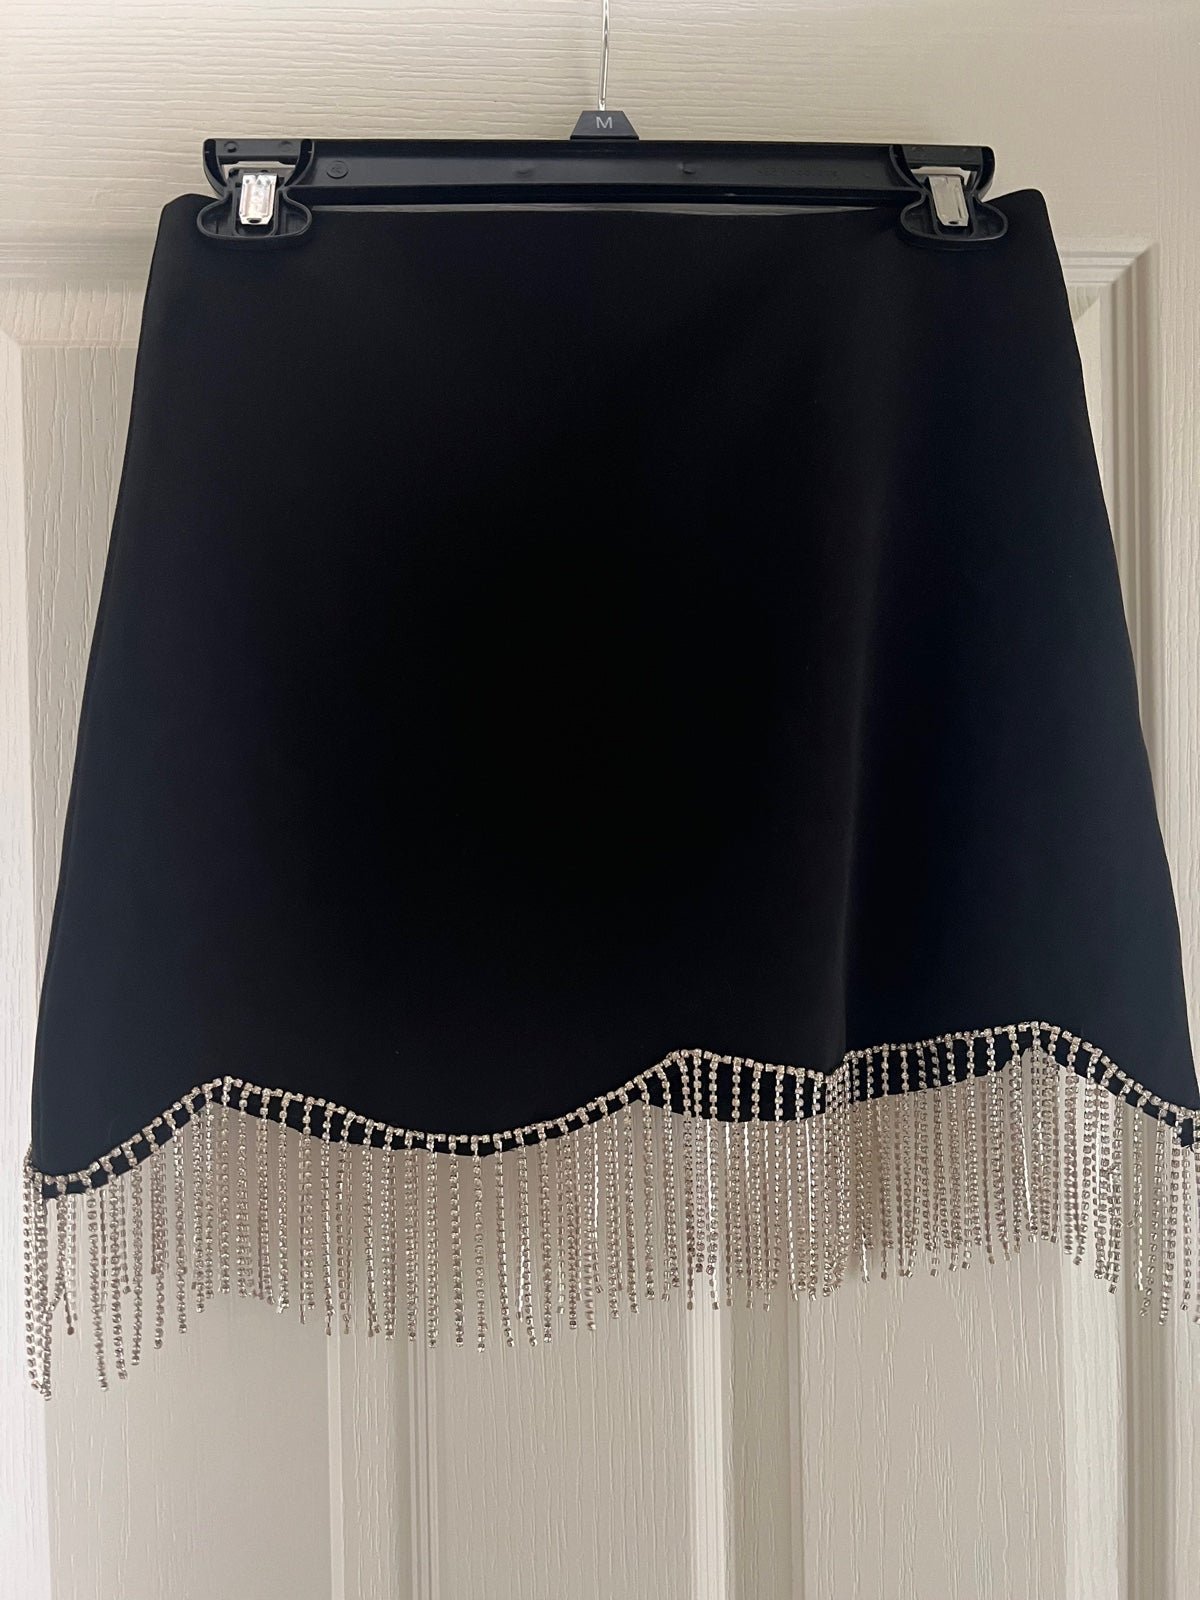 Wholesale price Women’s skirt pjZfcK73C New Style